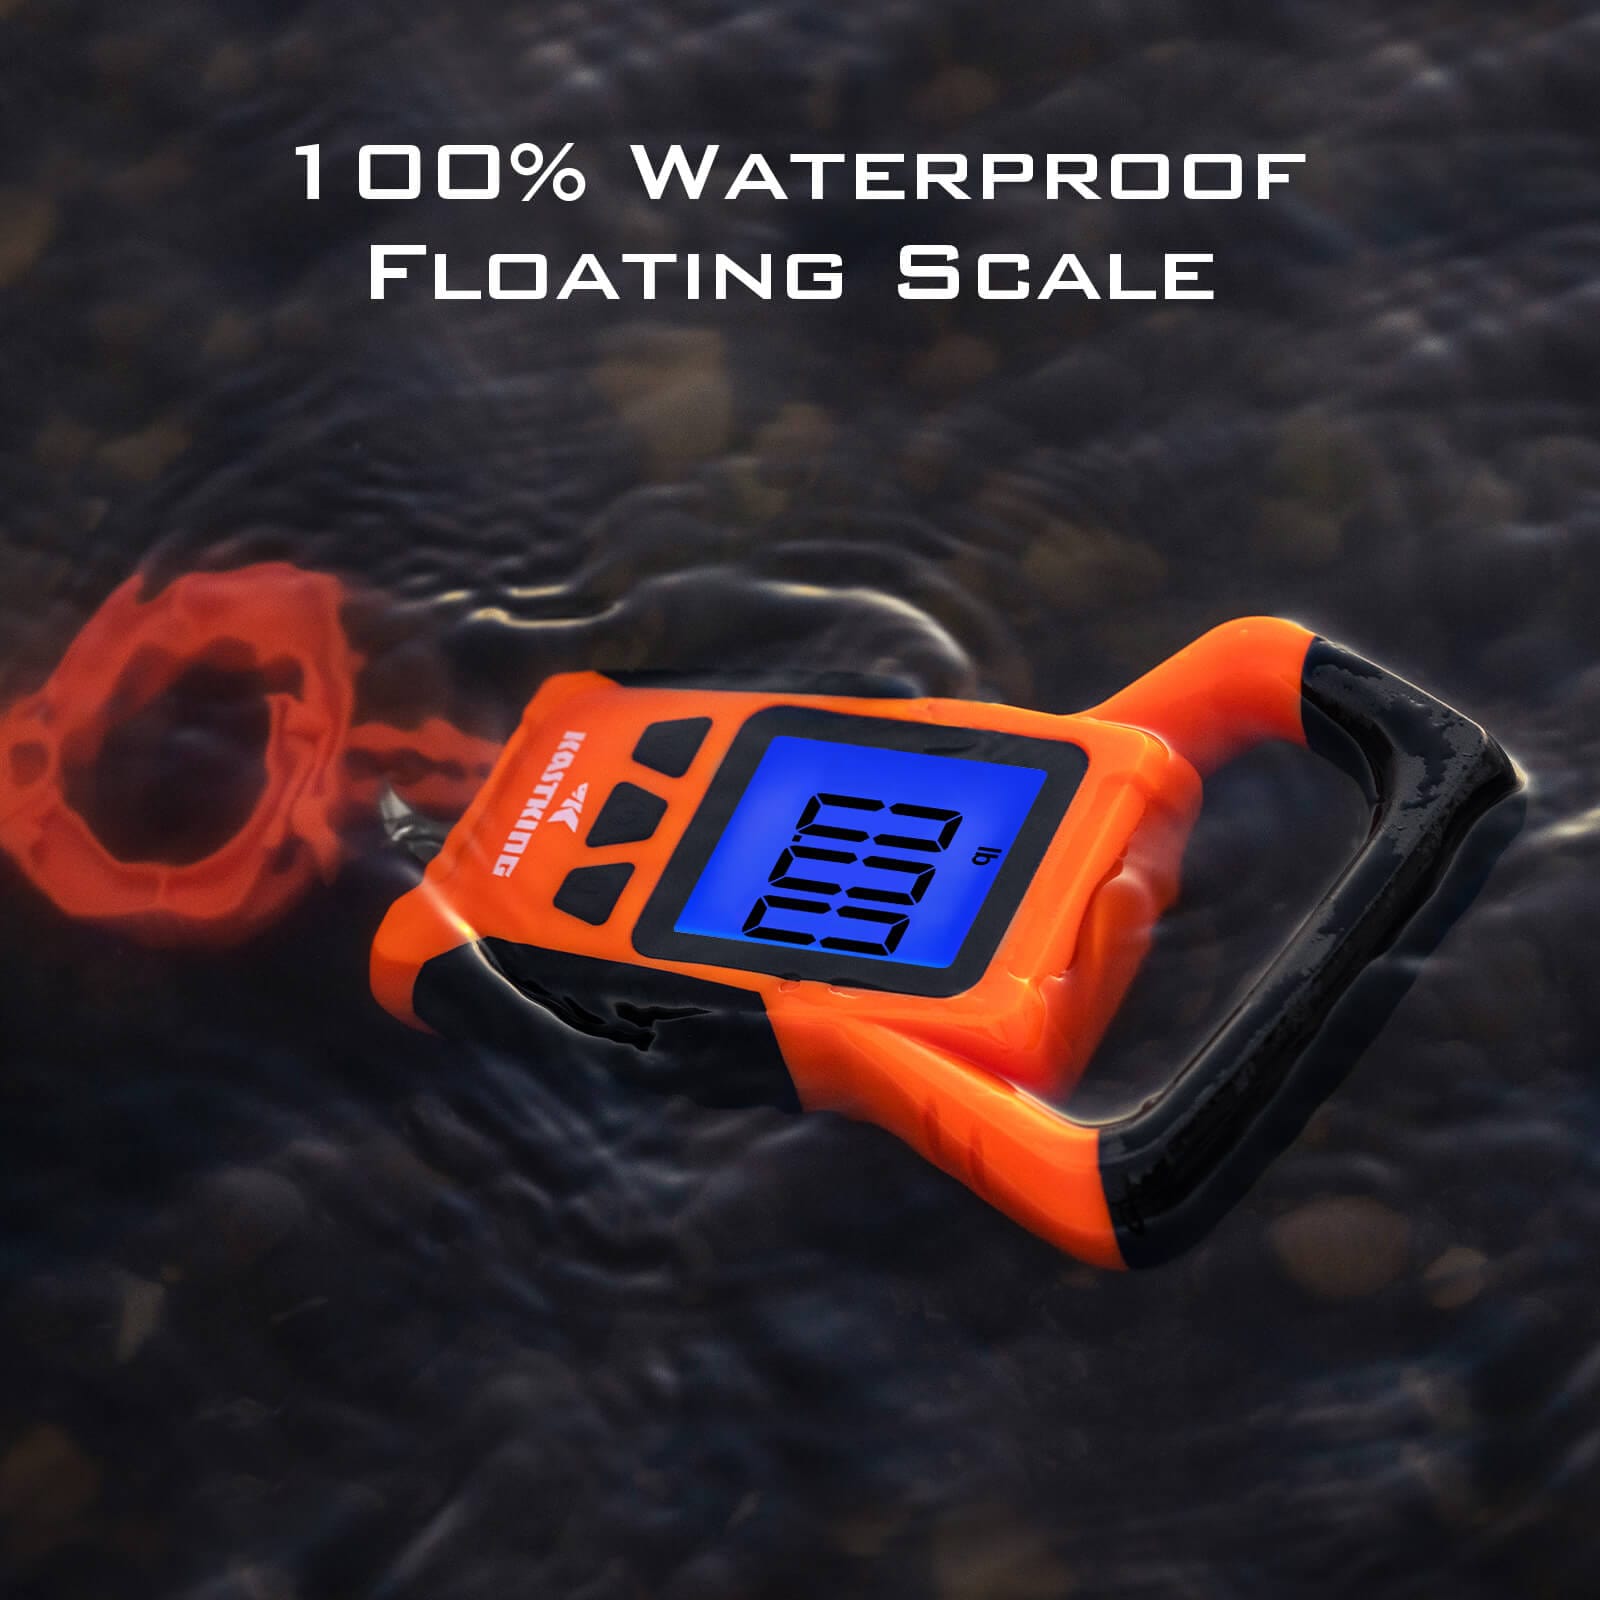 KastKing WideView Floating Waterproof Digital Scale and Lip Grip Combo